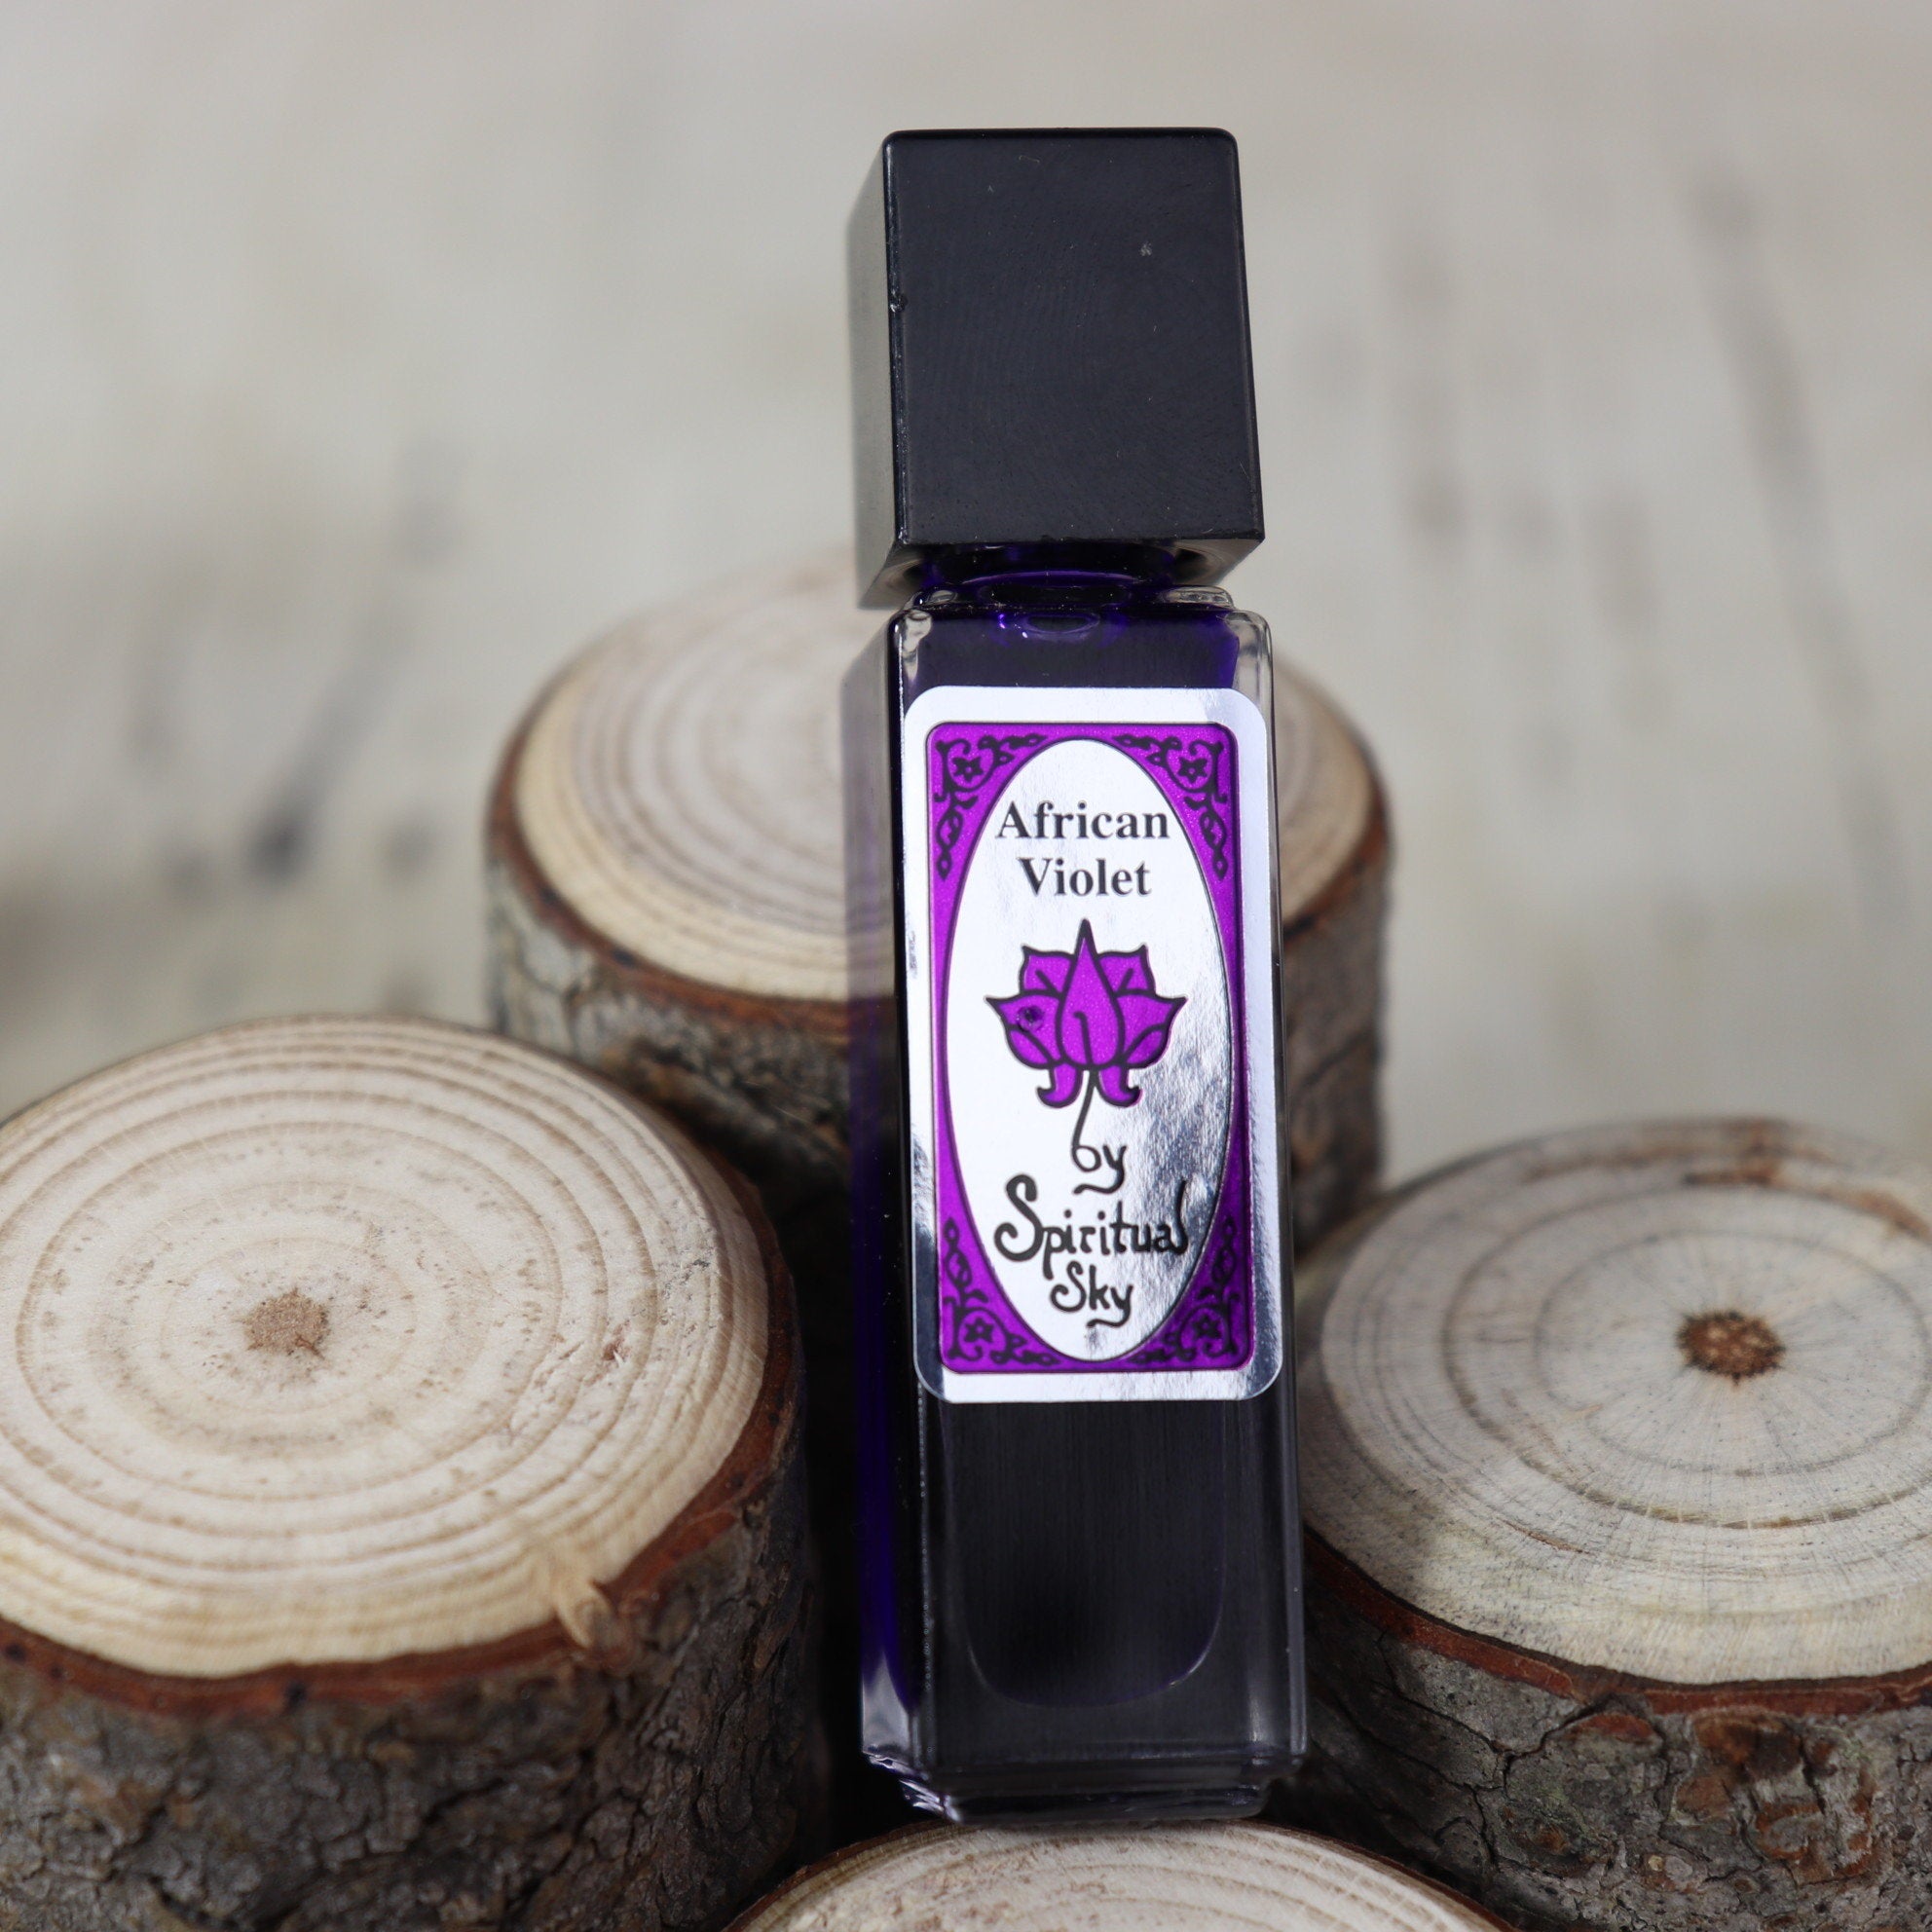 Spiritual Sky Perfume Oil- African Violet - The Spirit of Life